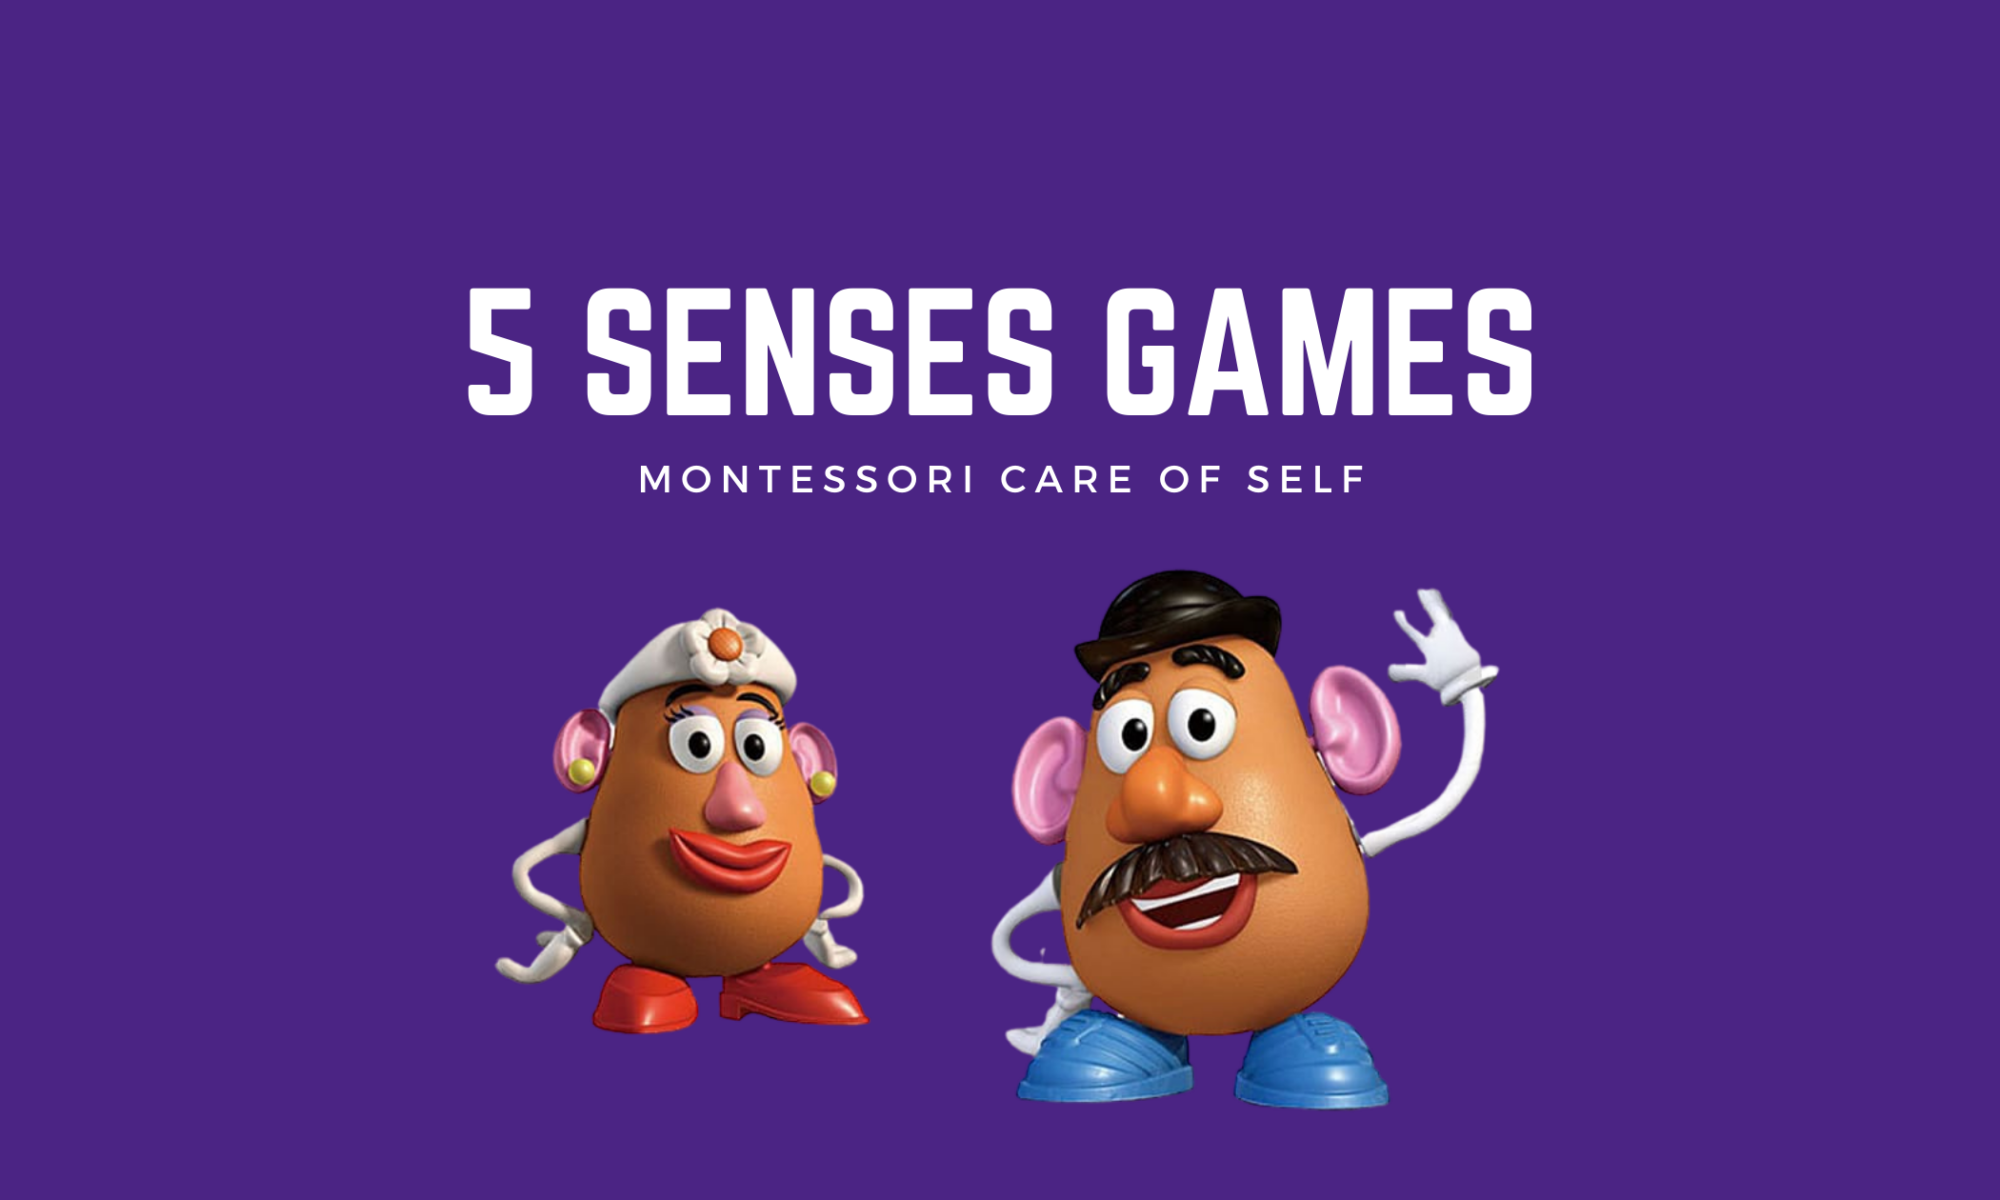 5 senses games above montessori care of self in white text above Mr and Mrs Potato Head on a dark purple background